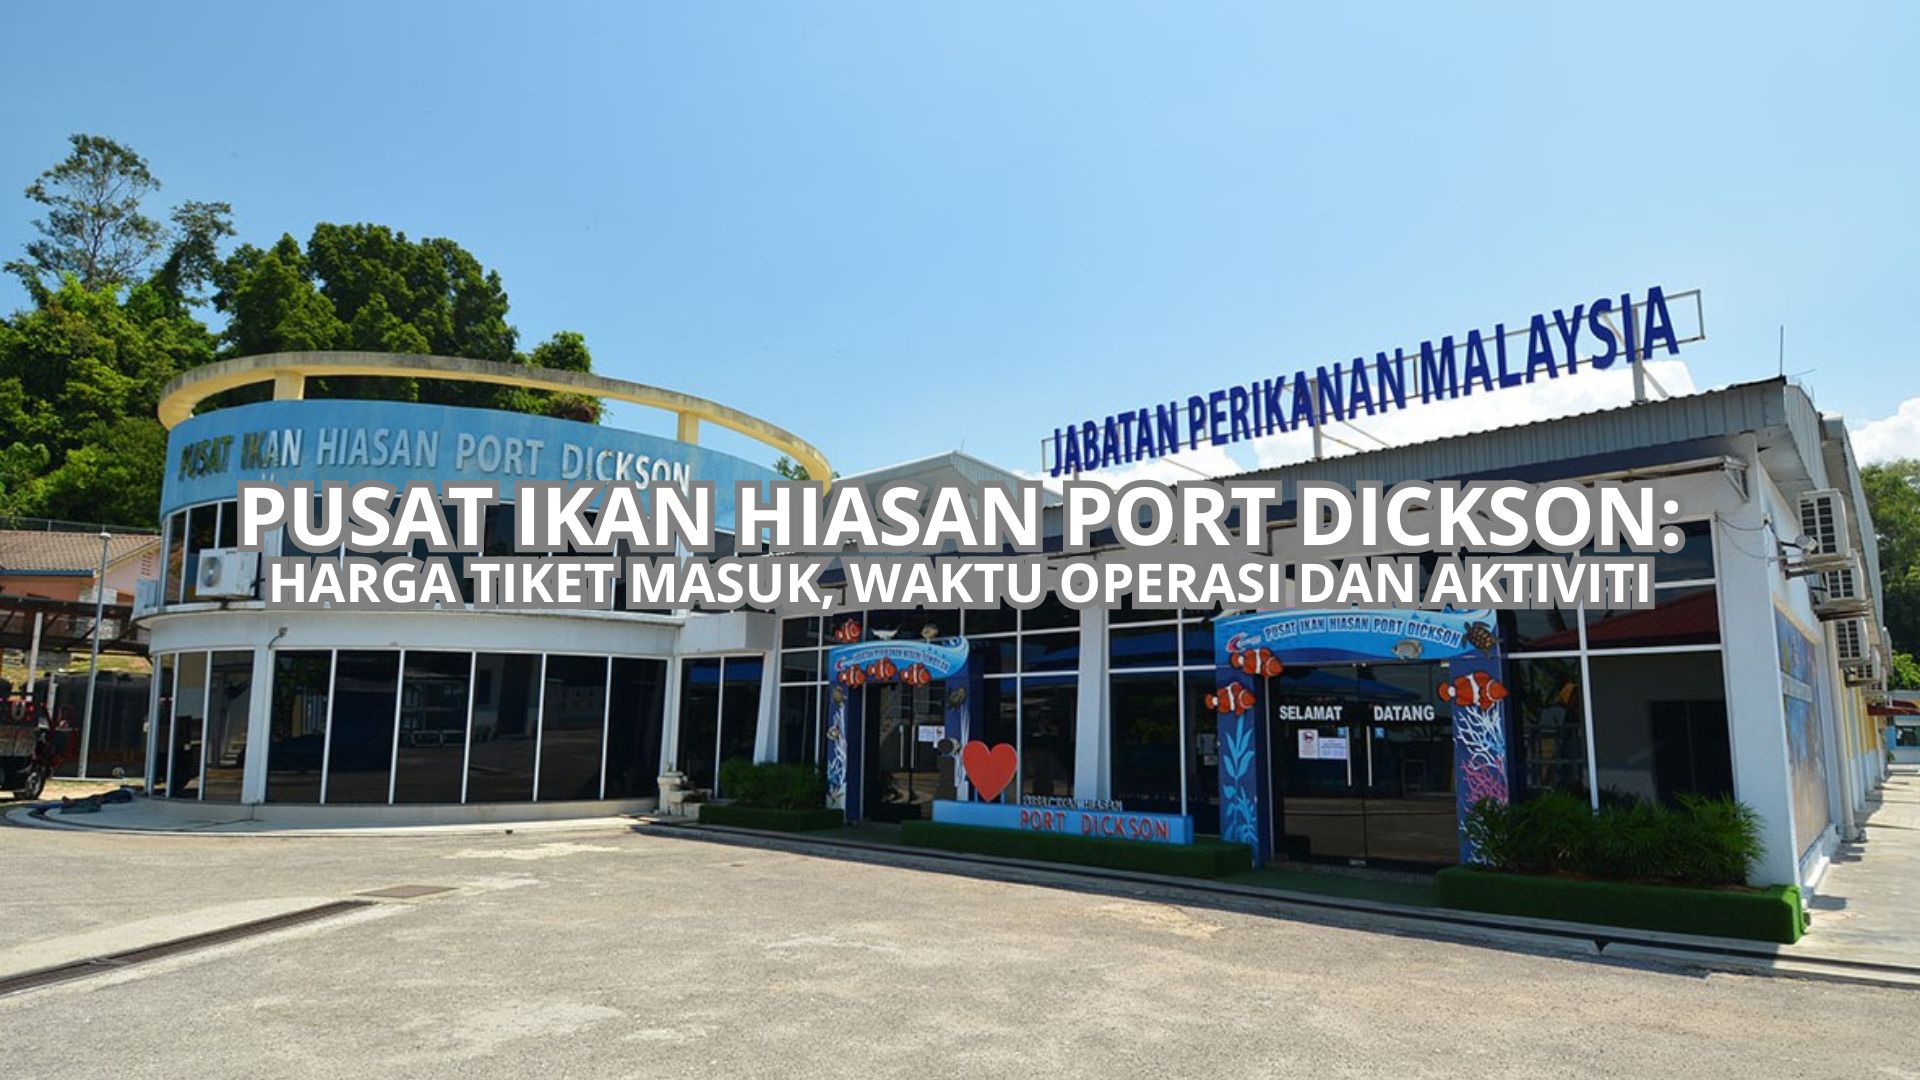 Pusat Ikan Hiasan Port Dickson Cover